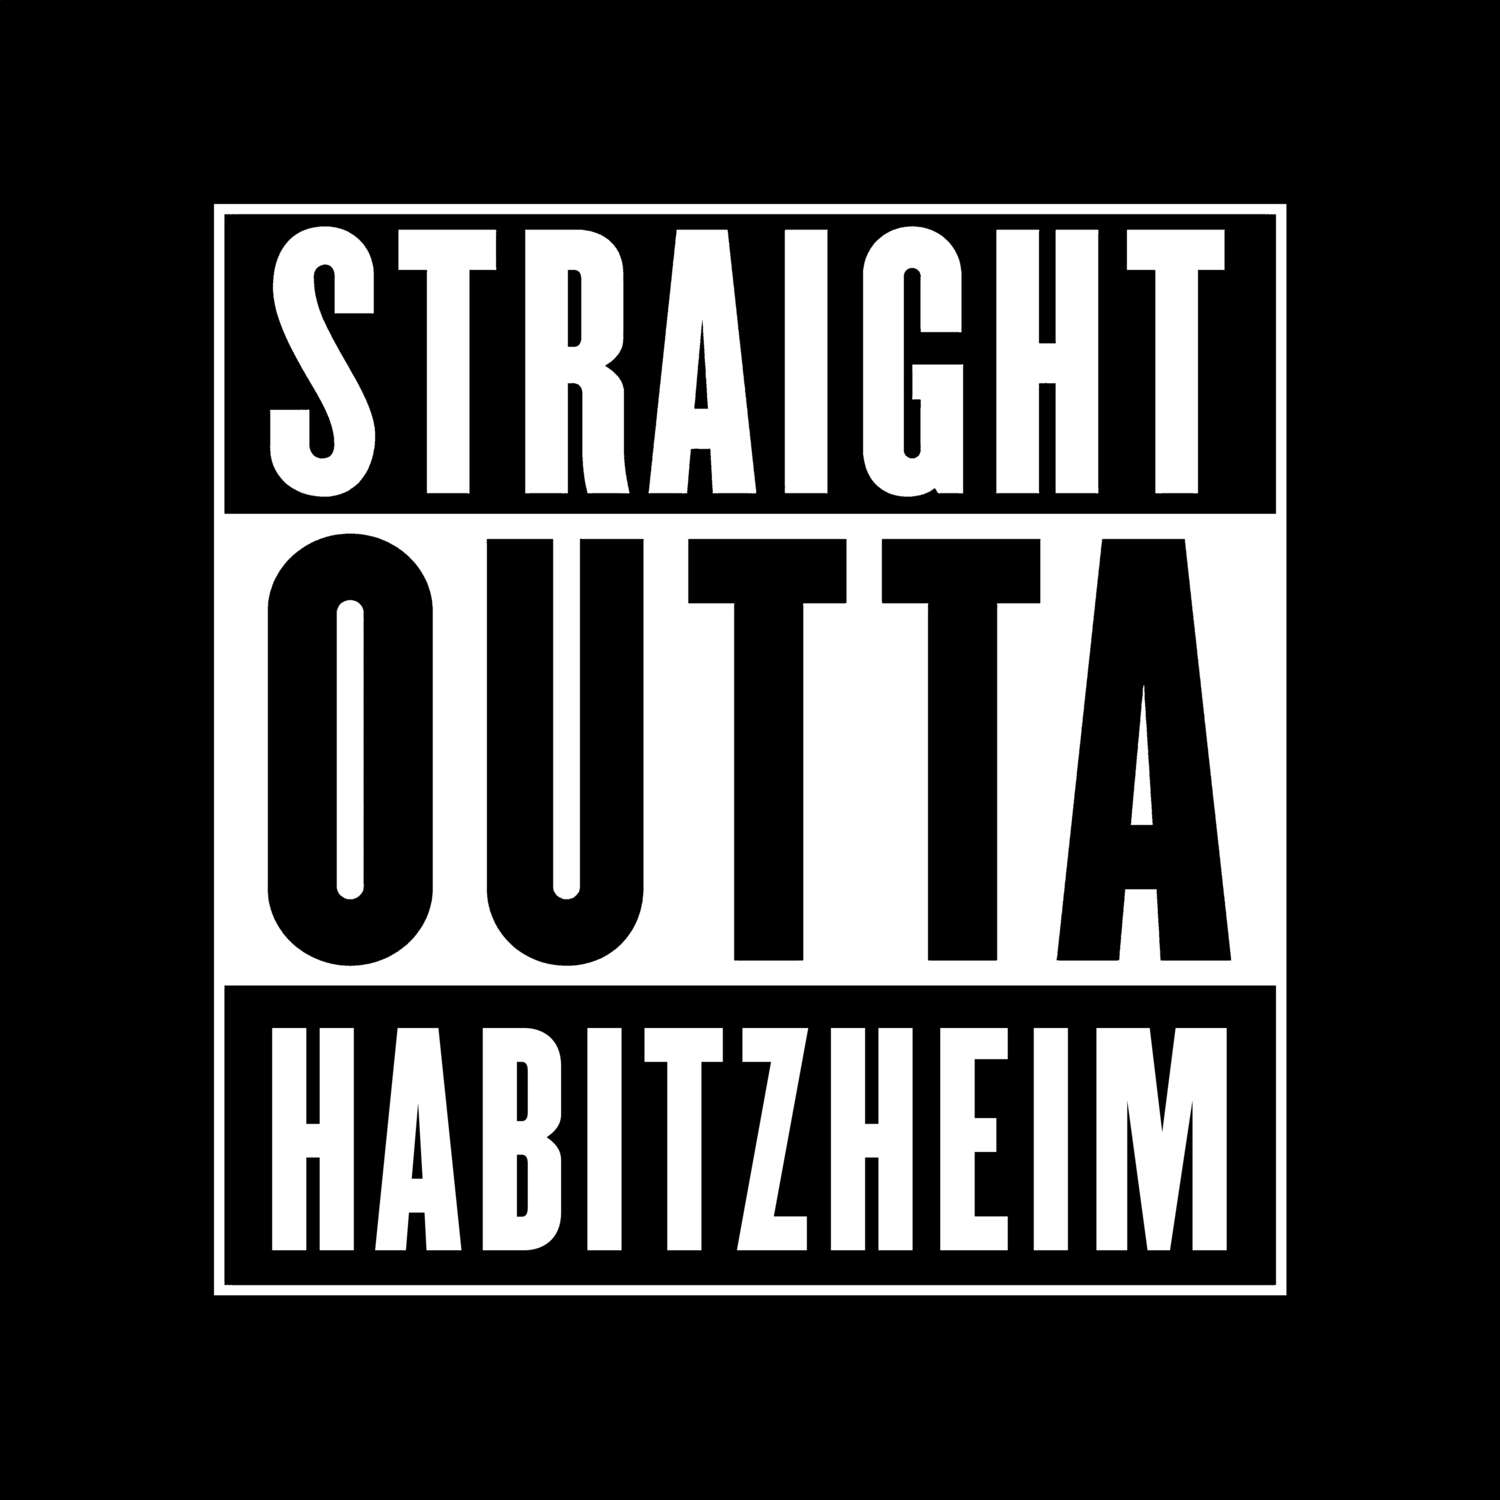 Habitzheim T-Shirt »Straight Outta«